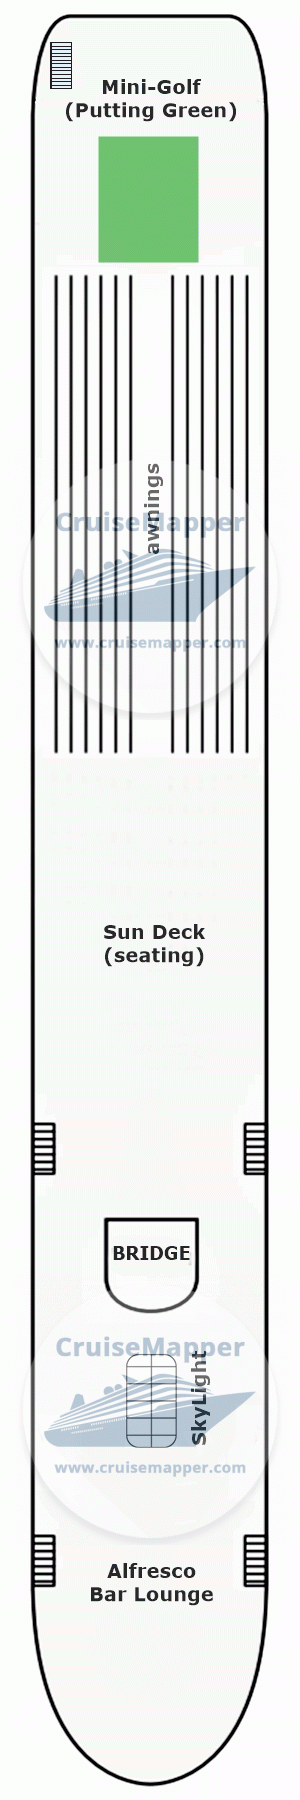 MS Lady Diletta Deck 04 - Sundeck